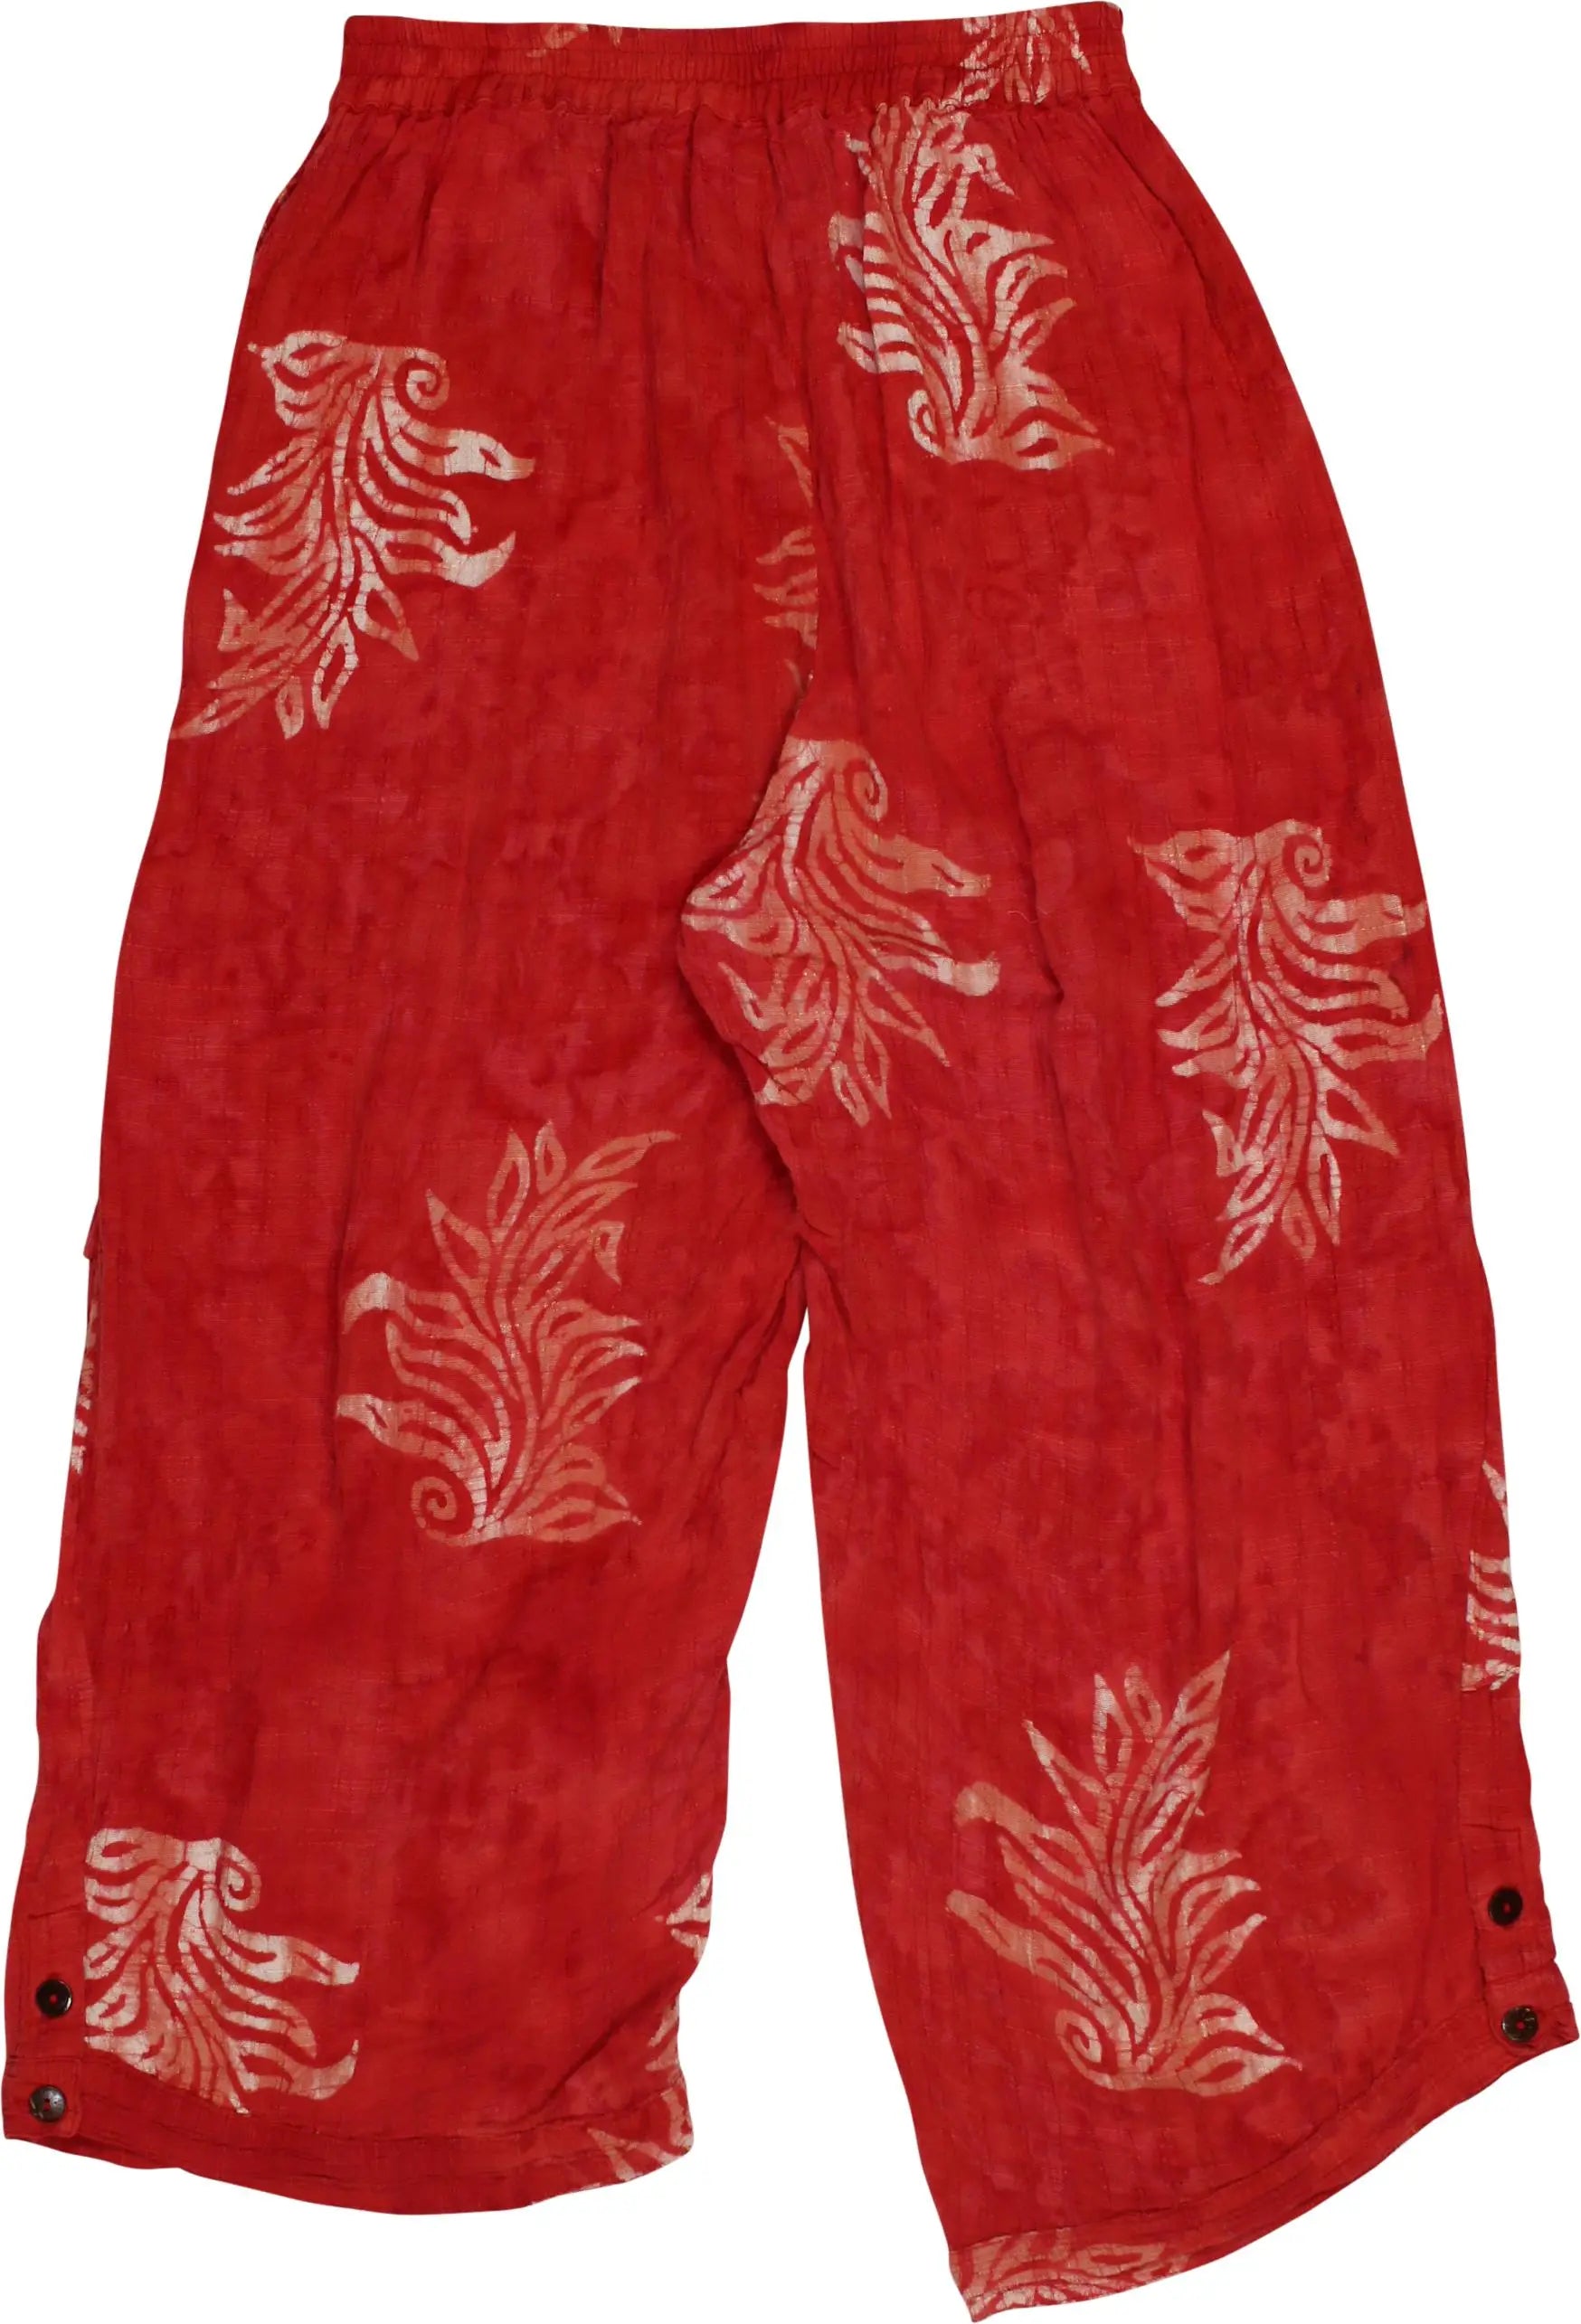 Normal Crazy - Linen Blend Pants- ThriftTale.com - Vintage and second handclothing